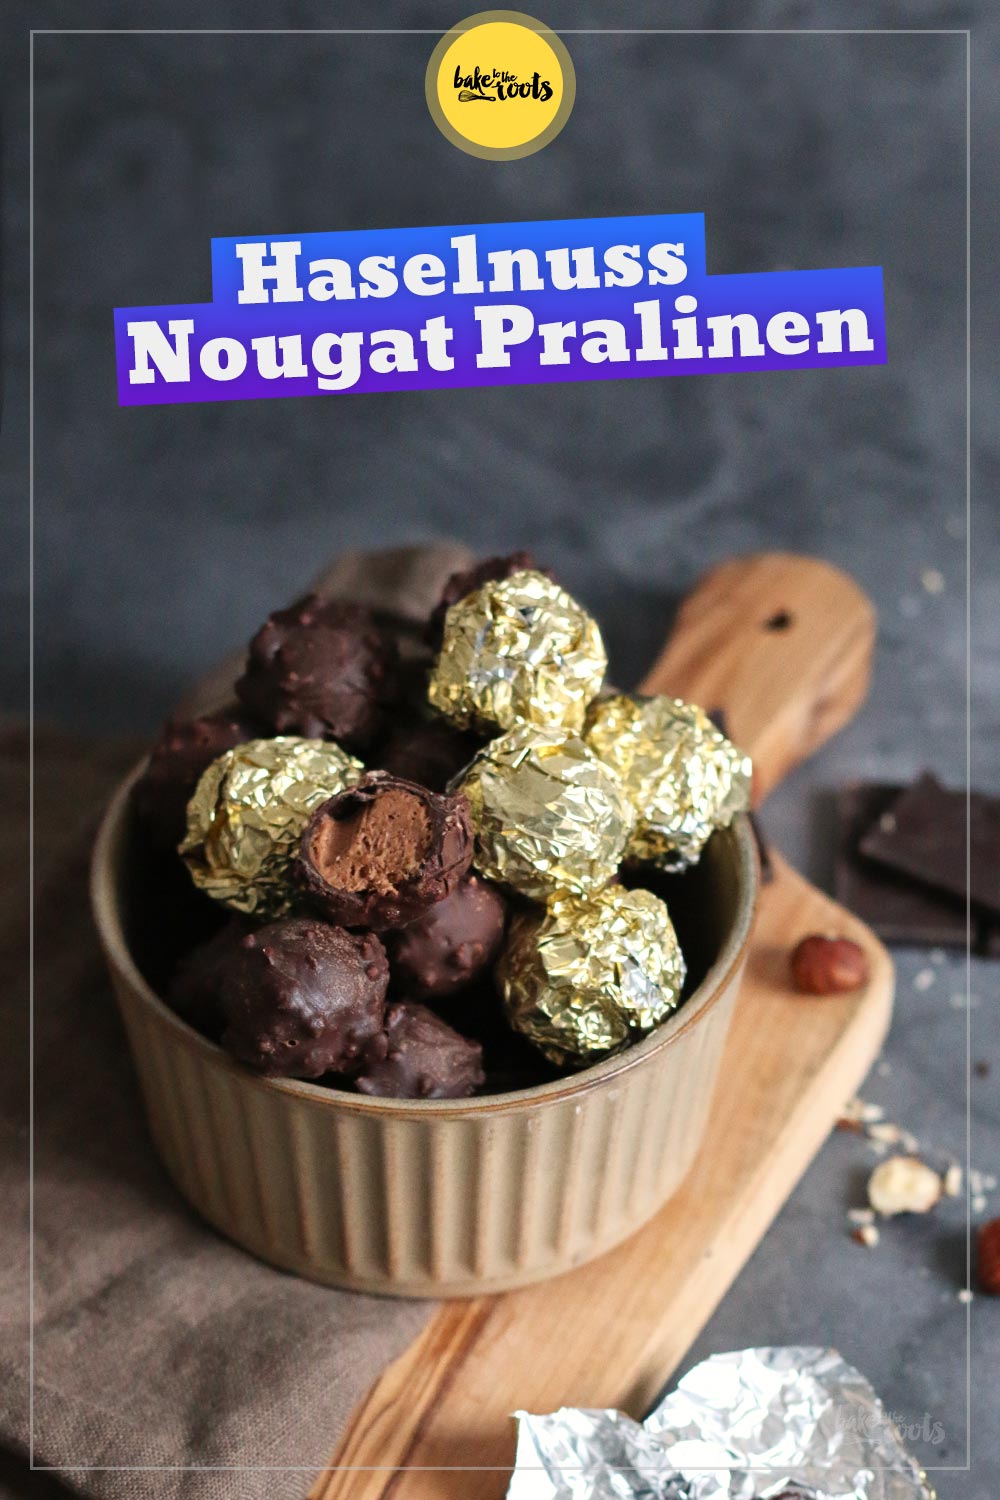 Haselnuss Nougat Pralinen | Bake to the roots